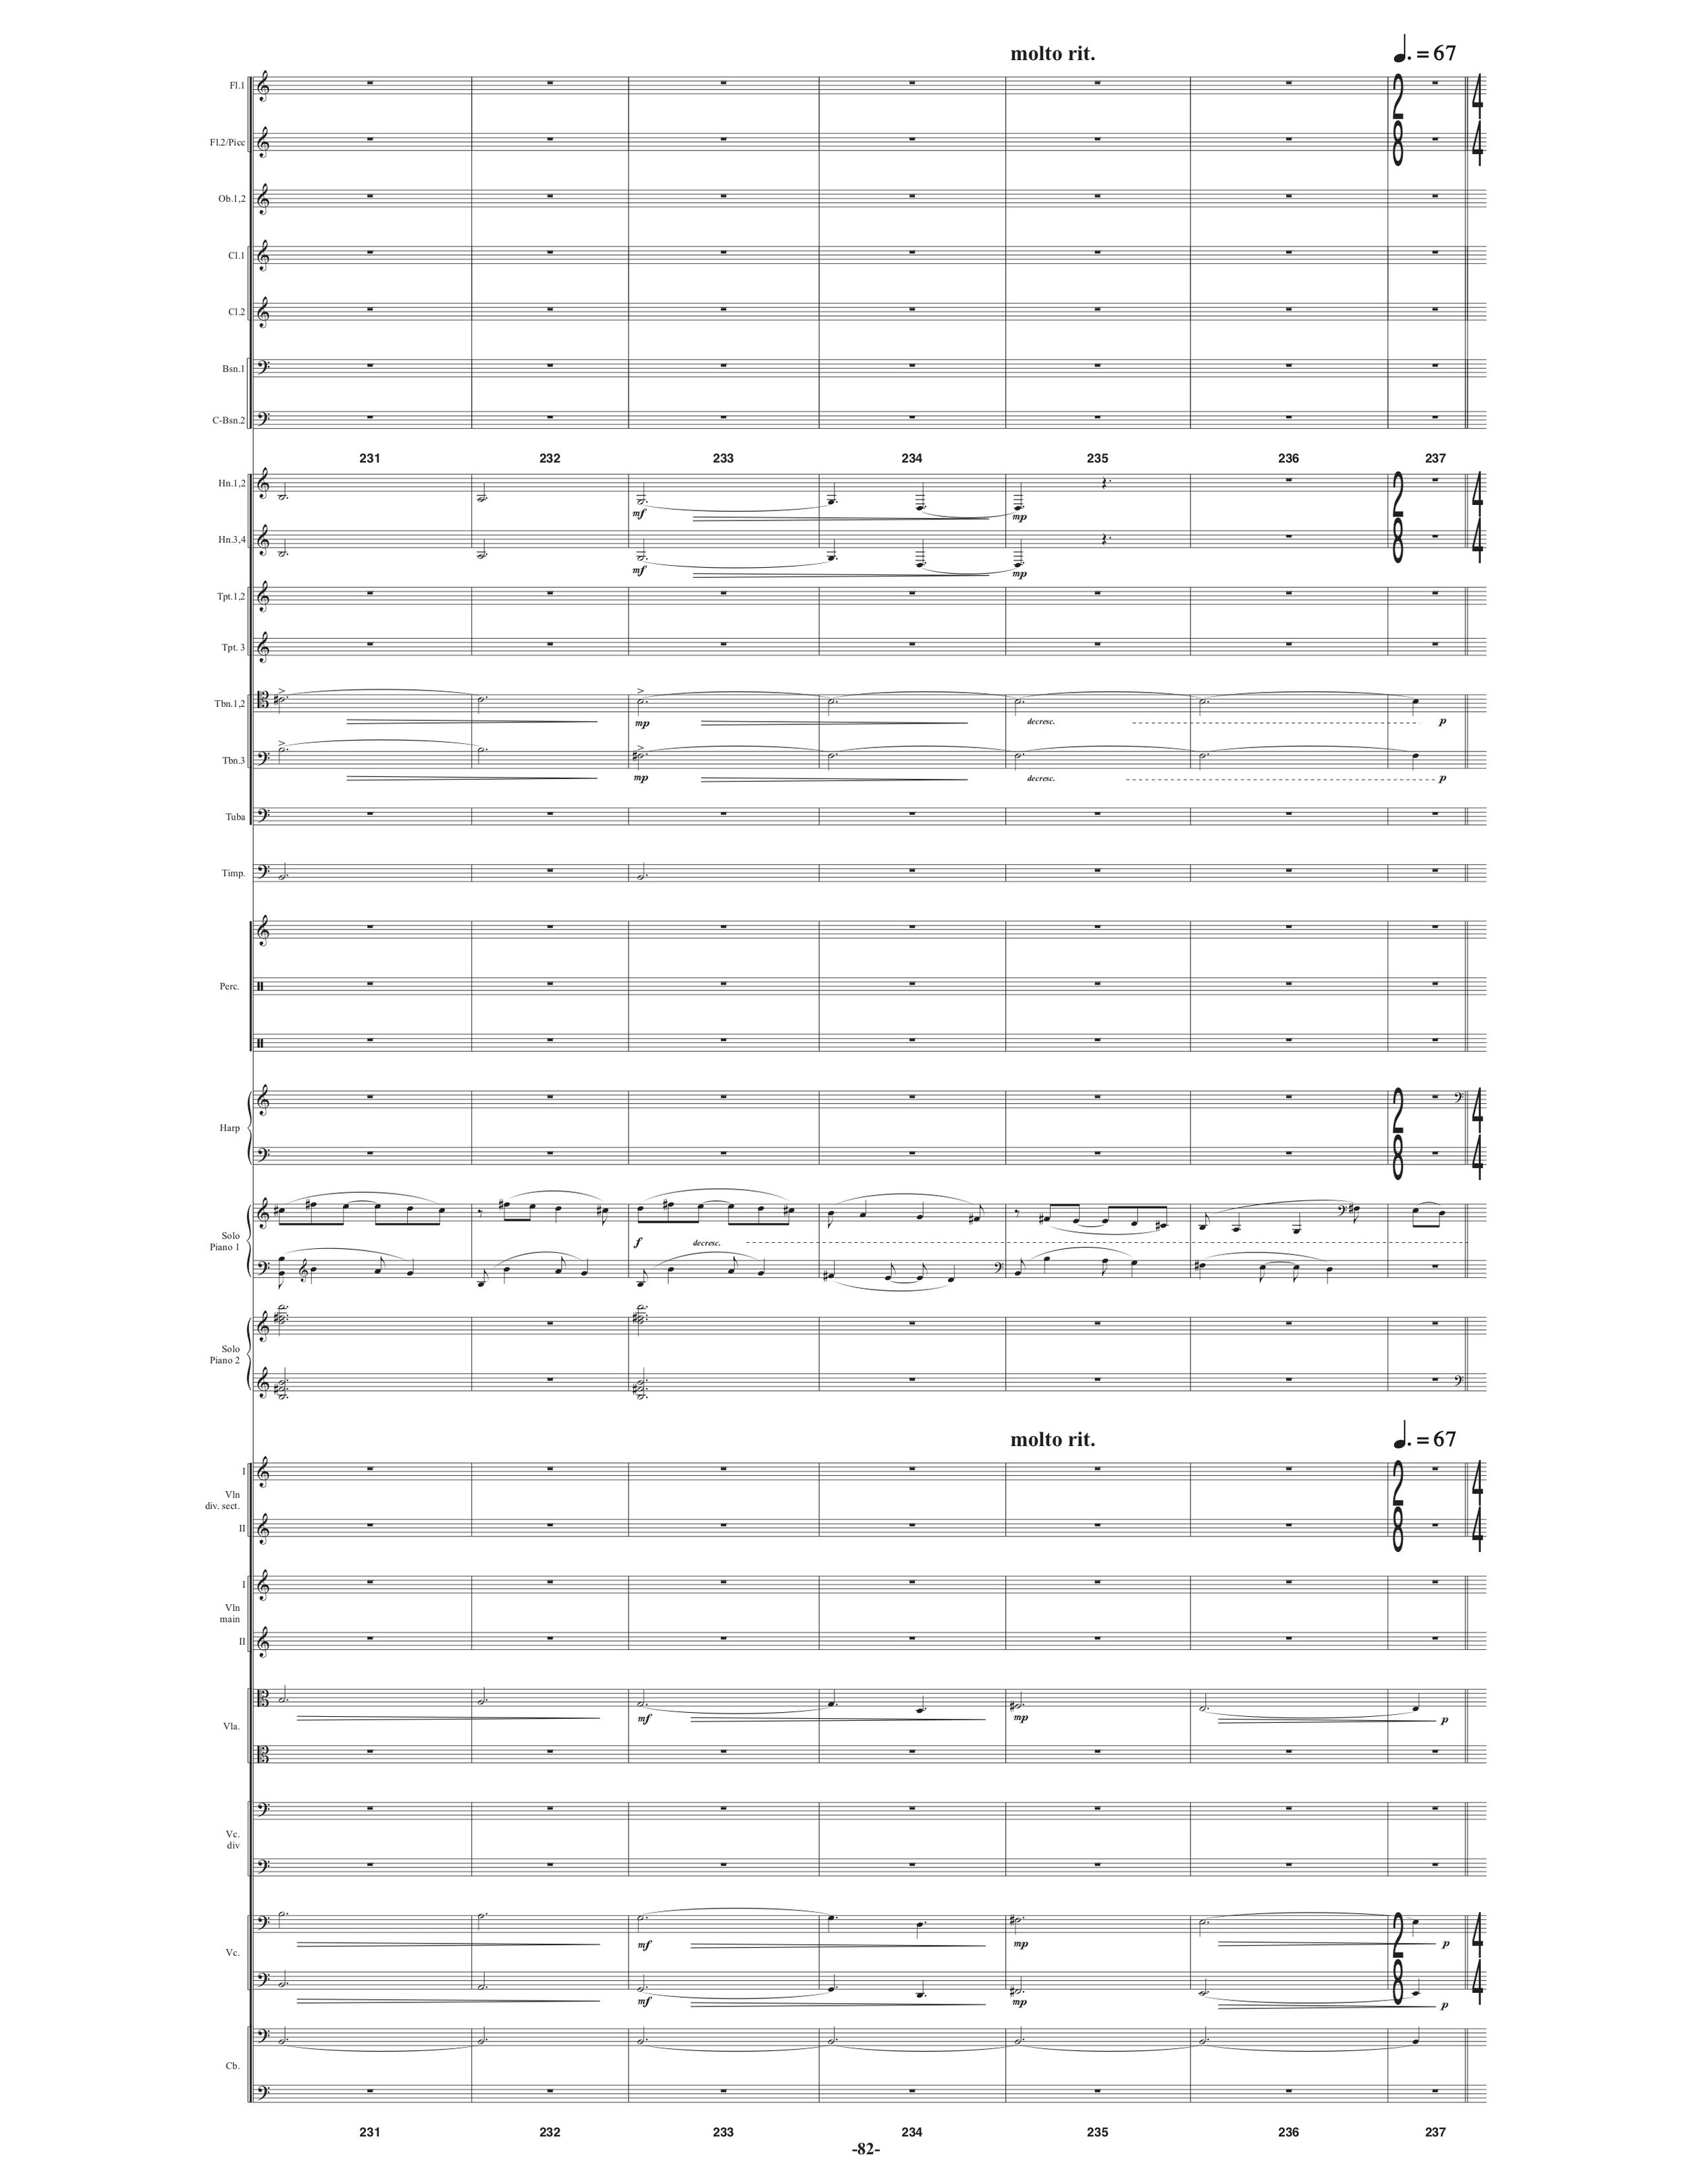 Symphony_Orch & 2 Pianos p87.jpg